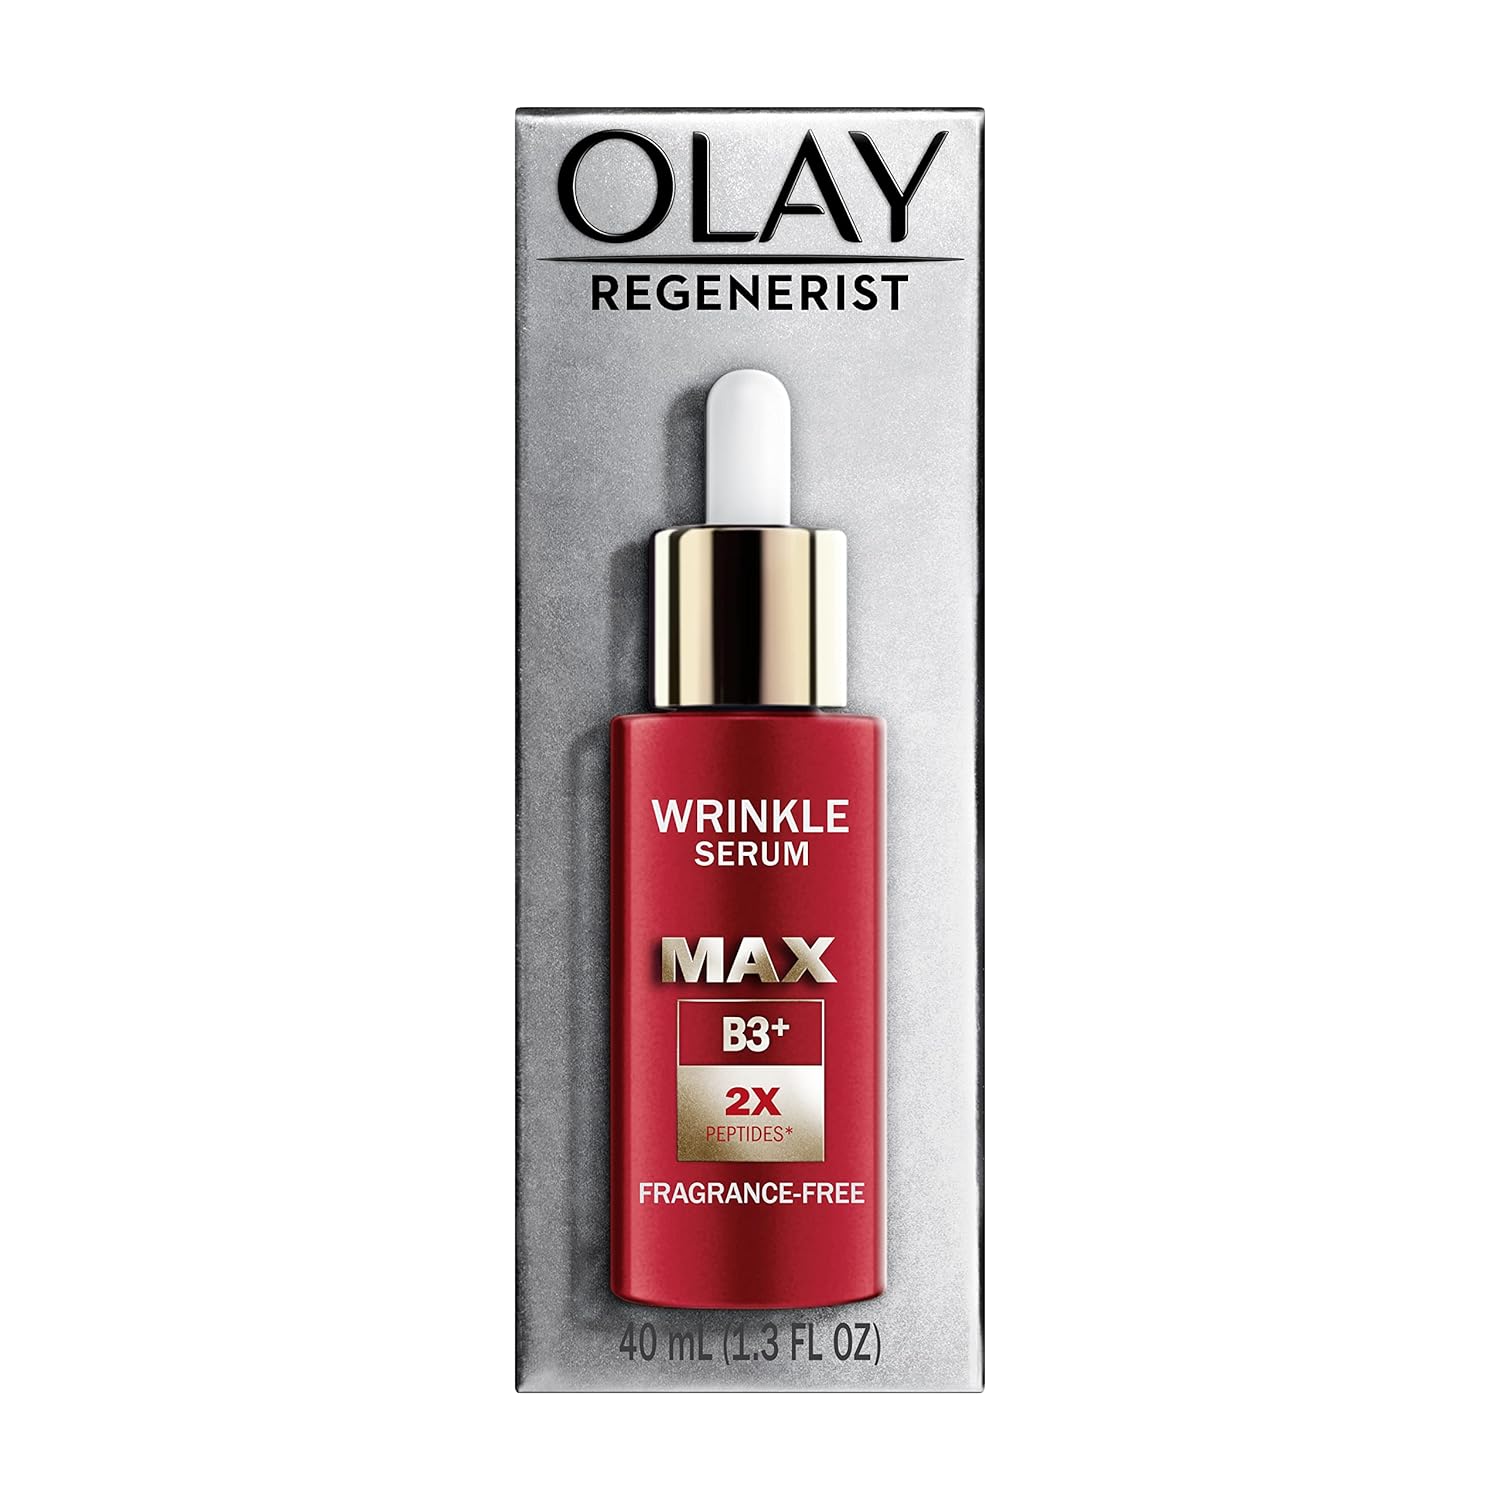 Olay Regenerist MAX Wrinkle Serum with Peptides, Fragrance Free 1.3